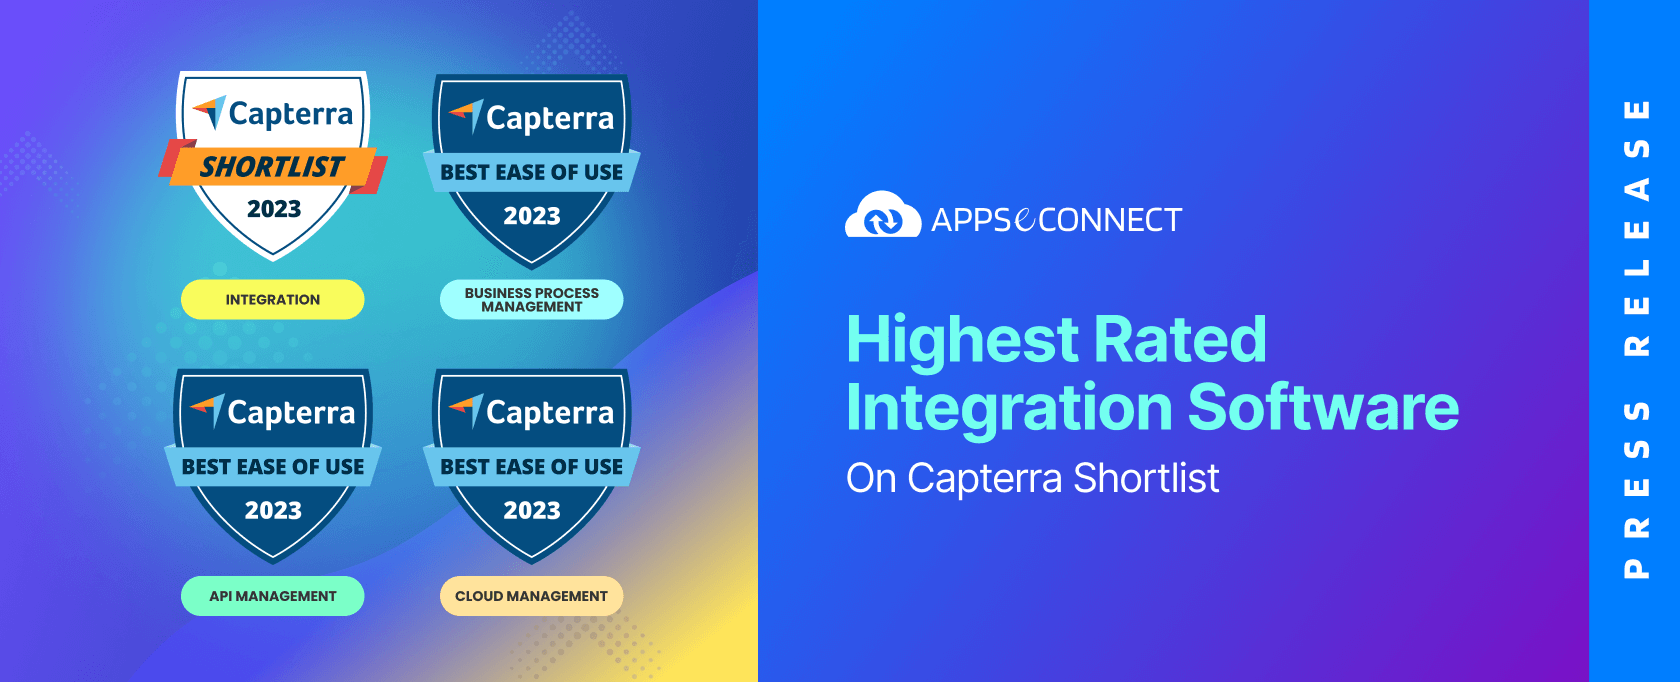 capterra-highest-rated-integration-software-jul-2023-appseconnect